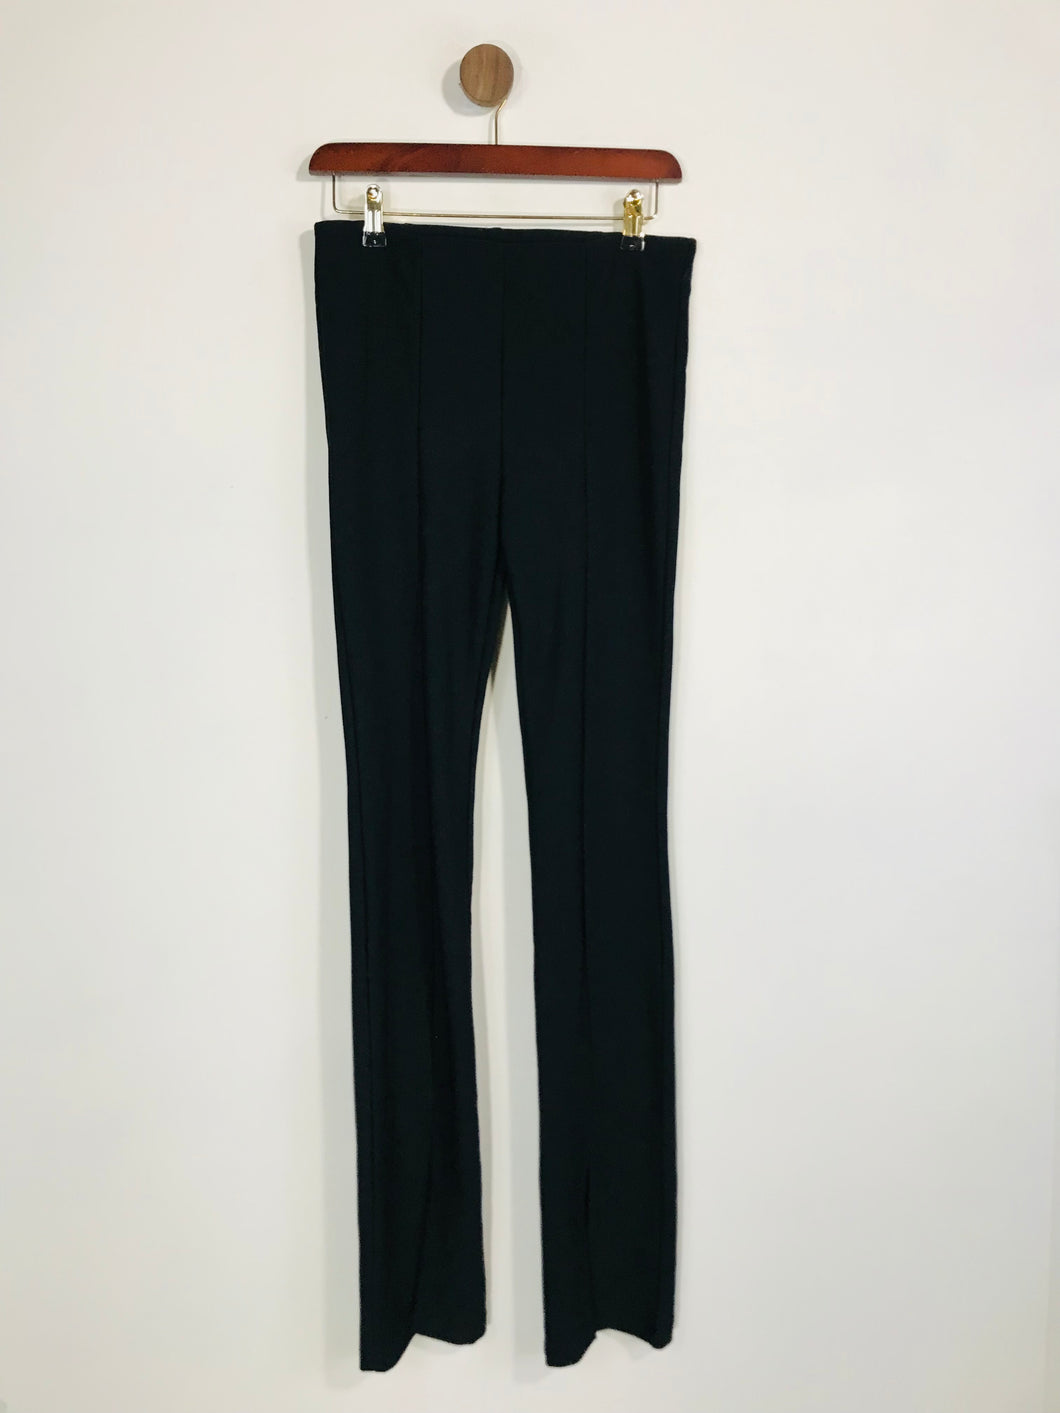 Zara Women's Ribbed Casual Trousers | M UK10-12 | Black